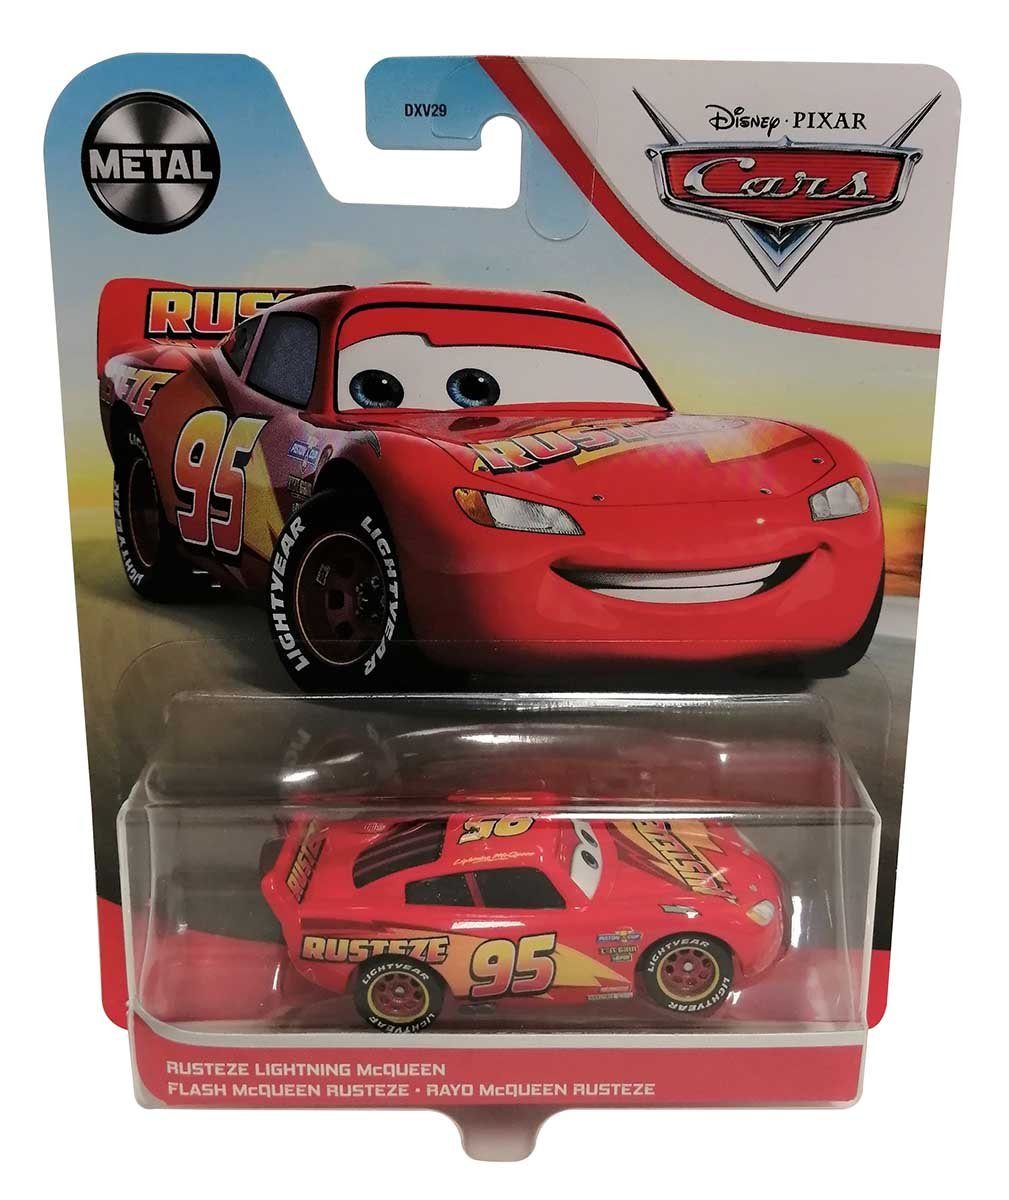 Disney Cars Spielzeug-Auto Mattel GXG33 Lightning 2 Disney Cars Pixar McQueen